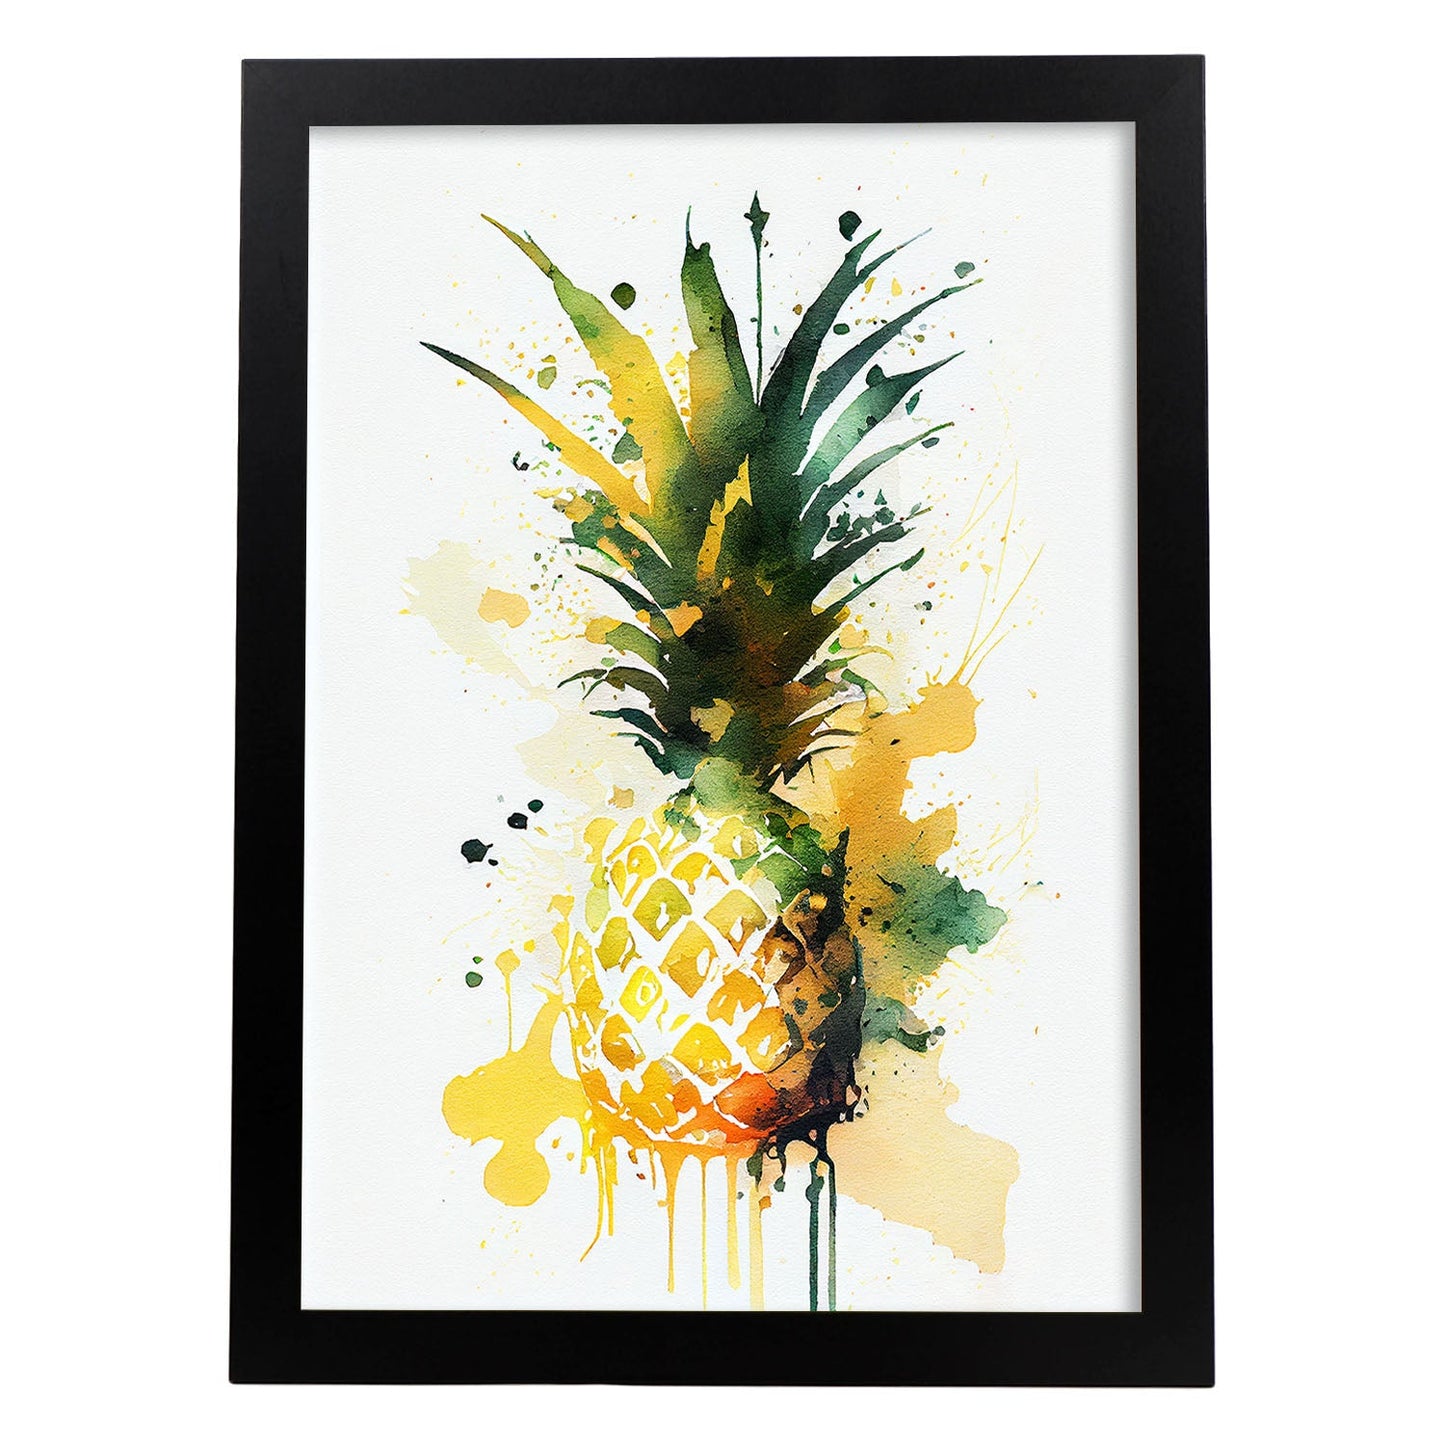 Nacnic minimalist Pineapple_7. Aesthetic Wall Art Prints for Bedroom or Living Room Design.